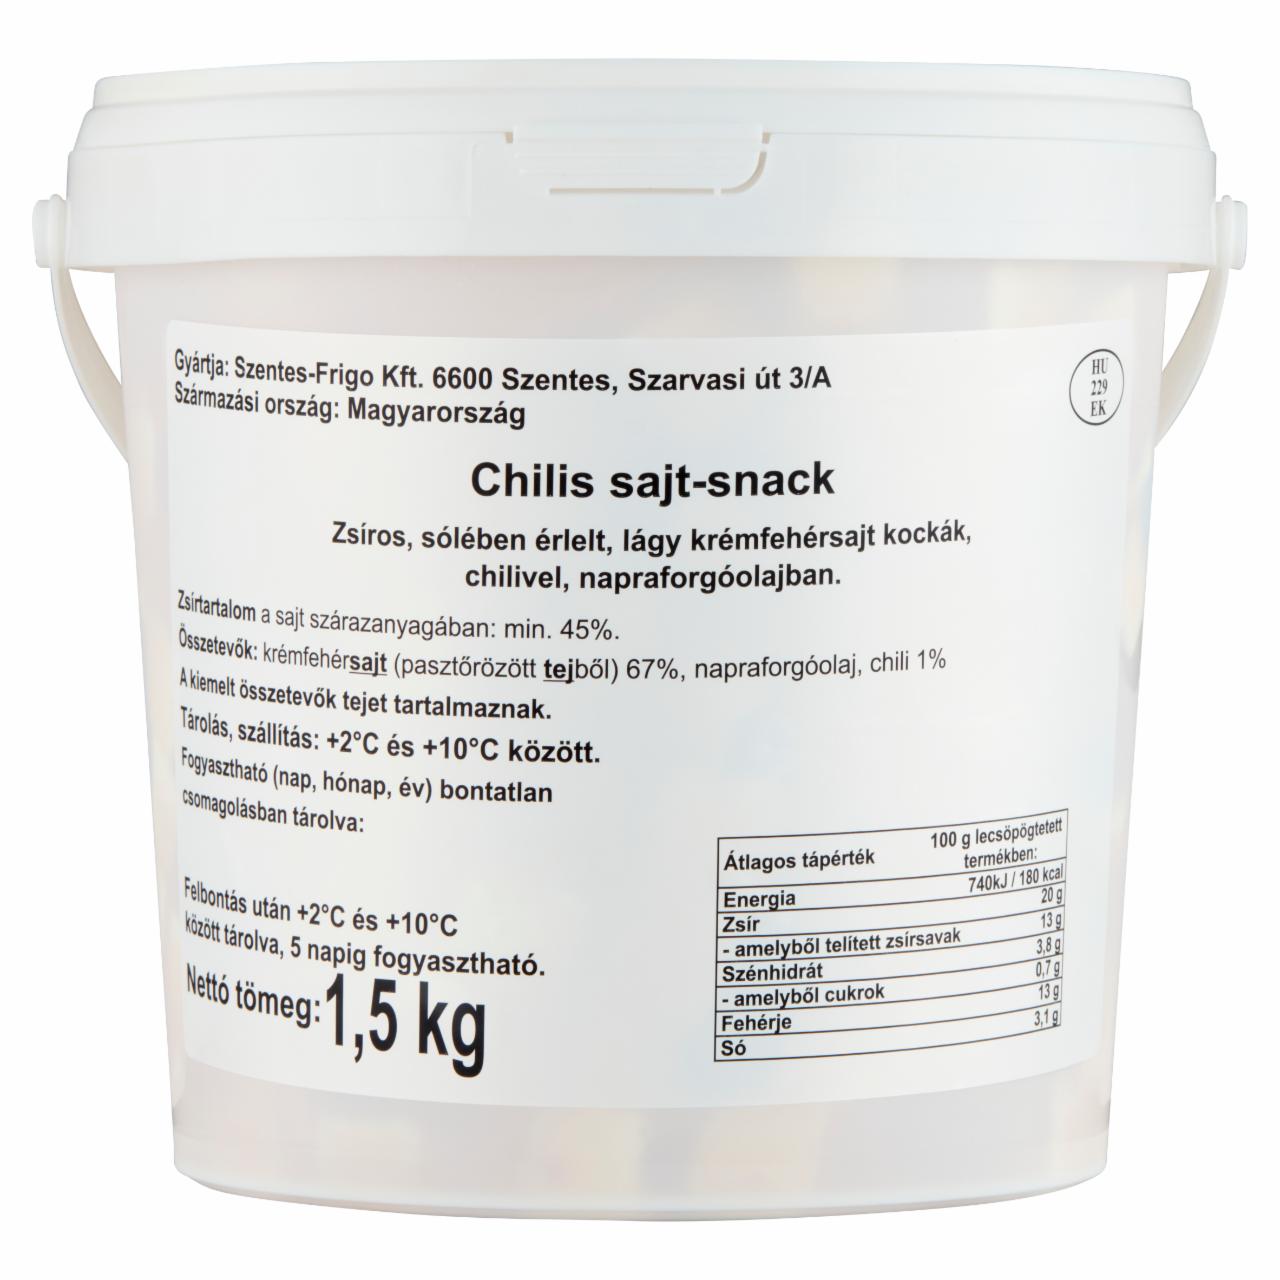 Képek - Chilis sajt-snack 1,5 kg